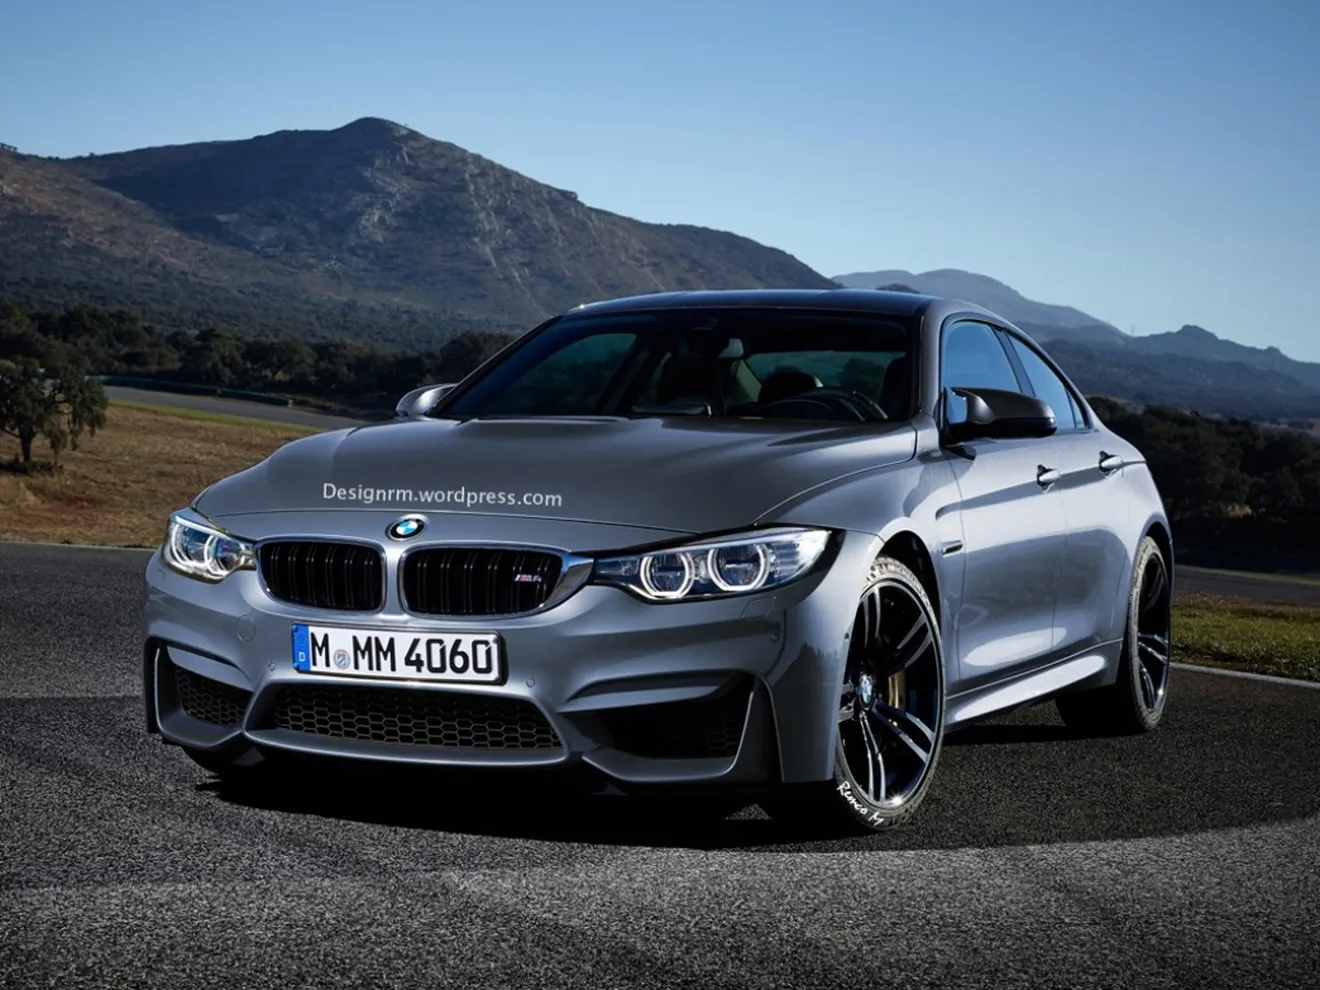 BMW M4 Gran Coupe, ¿el próximo BMW M?